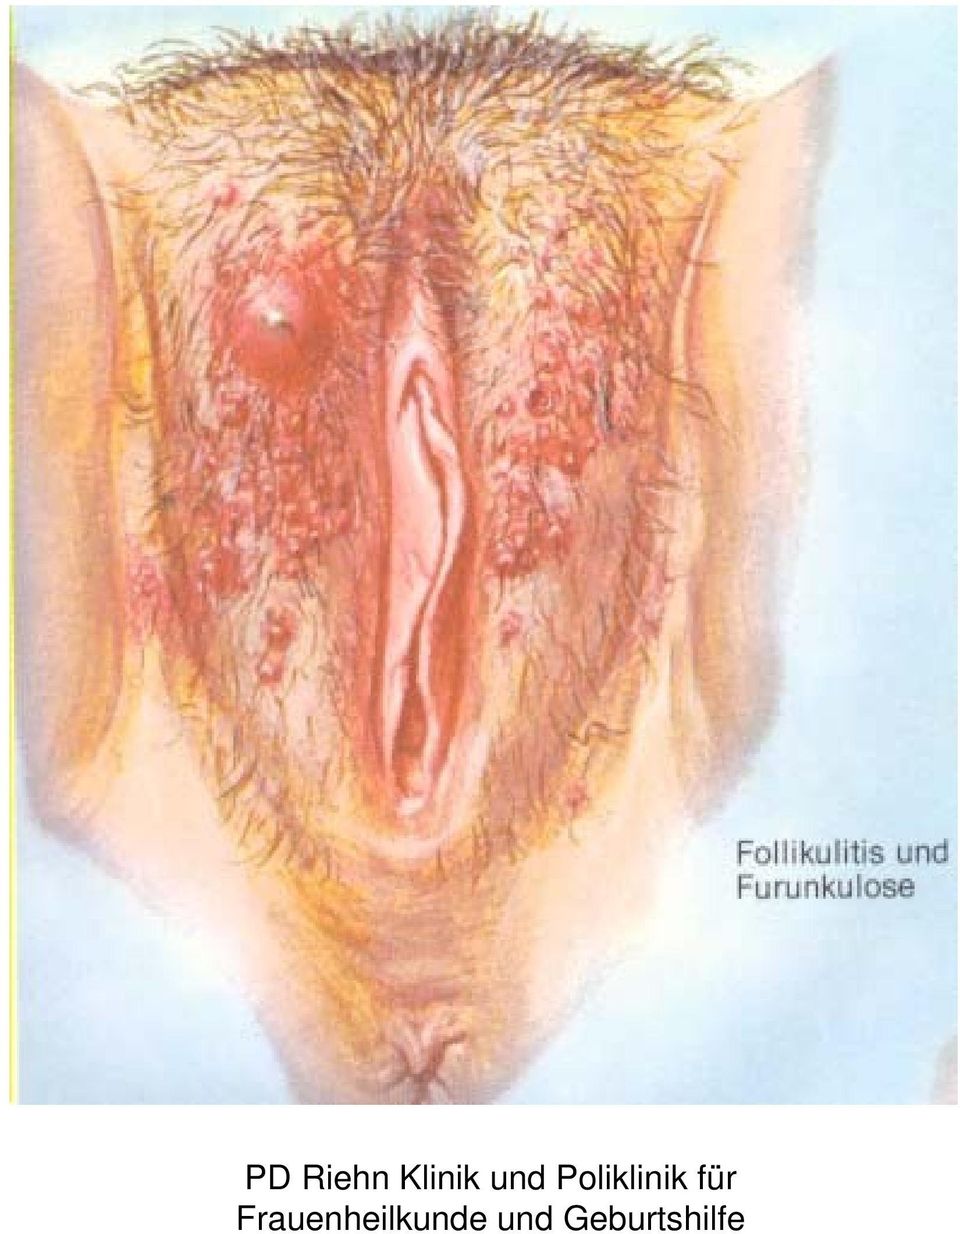 Bartholinischen entzündung drüse der Bartholinitis: Symptome,